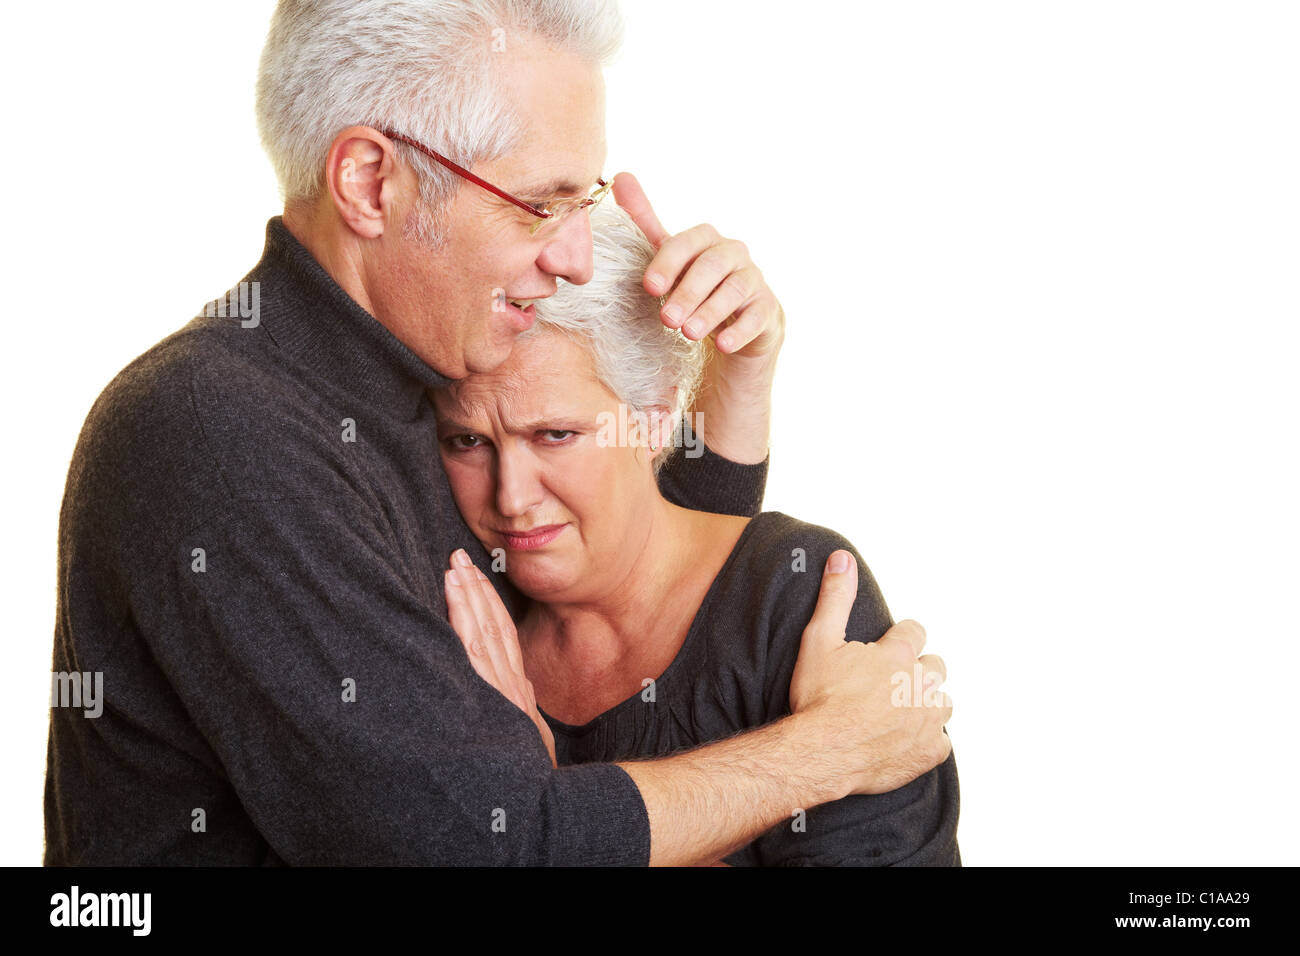 Man comforting woman Stock Photo